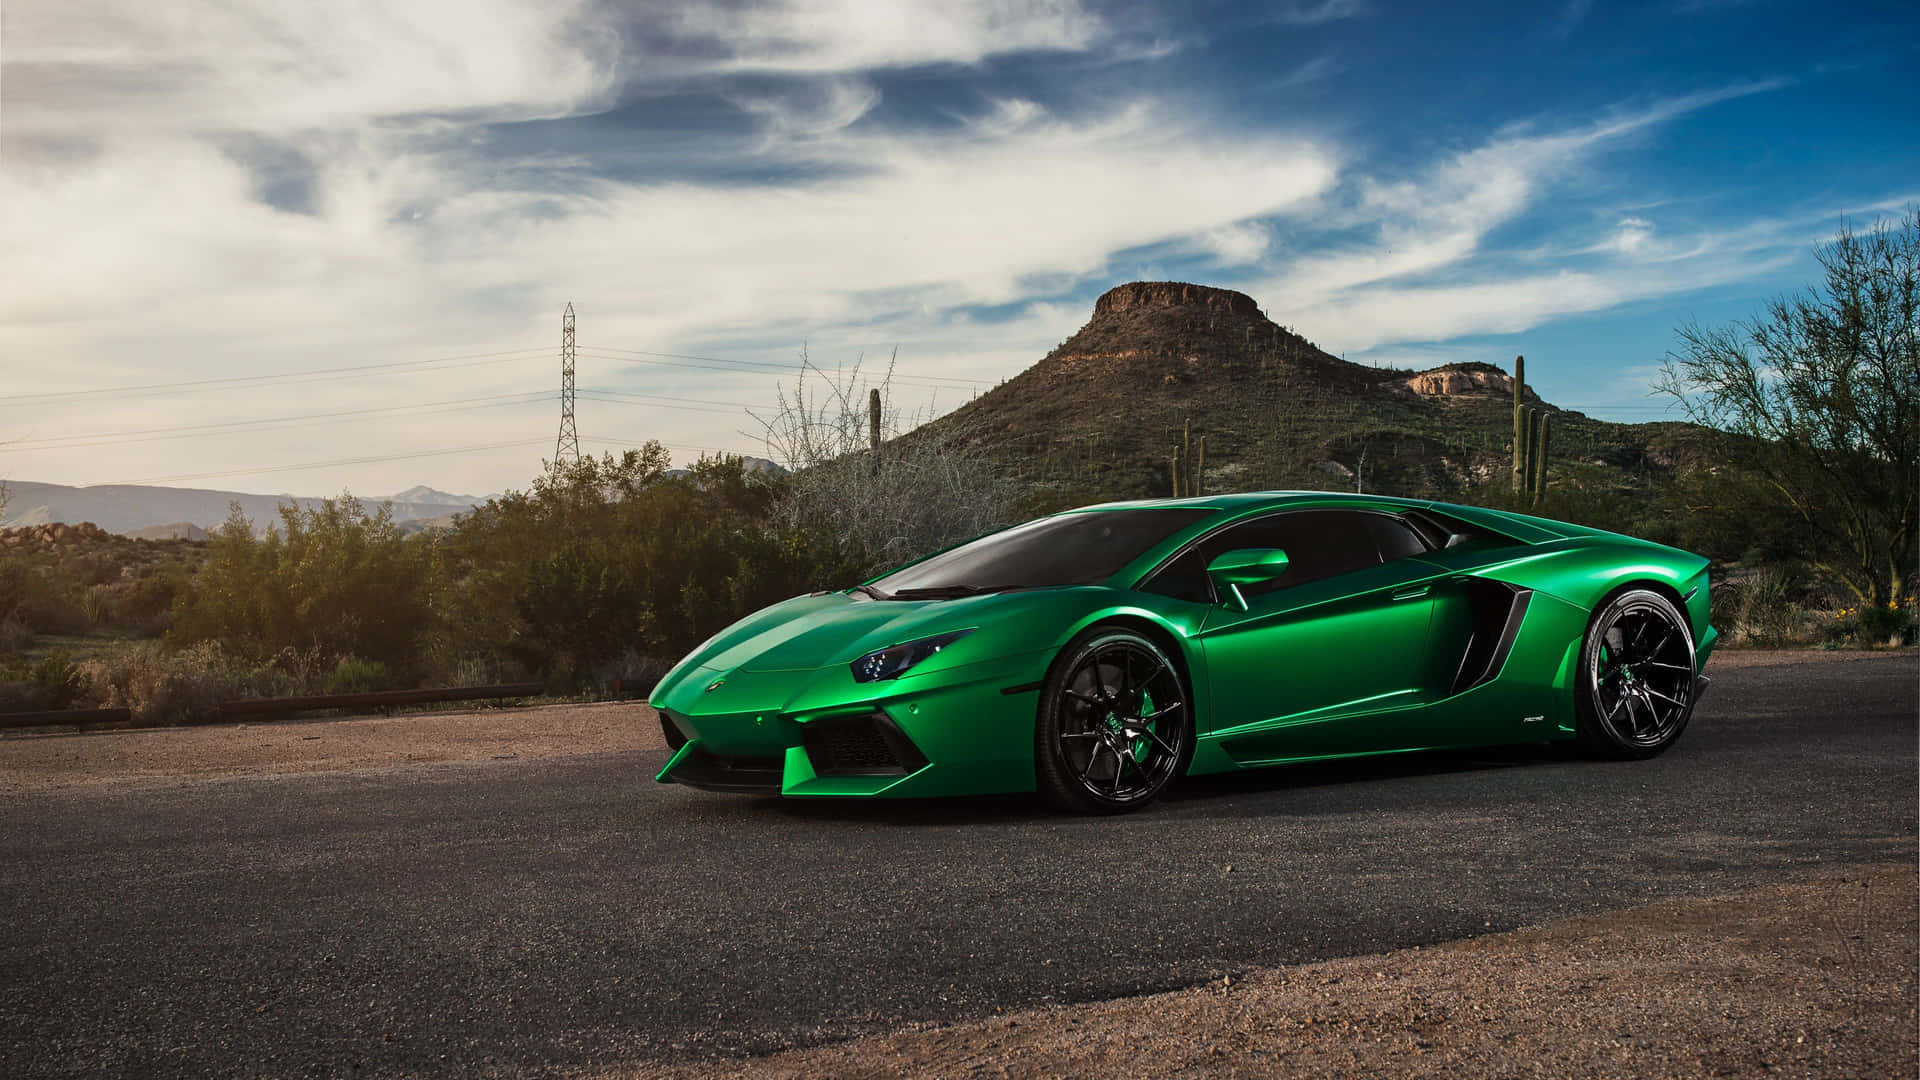 Cool Green Lamborghini Aventador Car Wallpaper